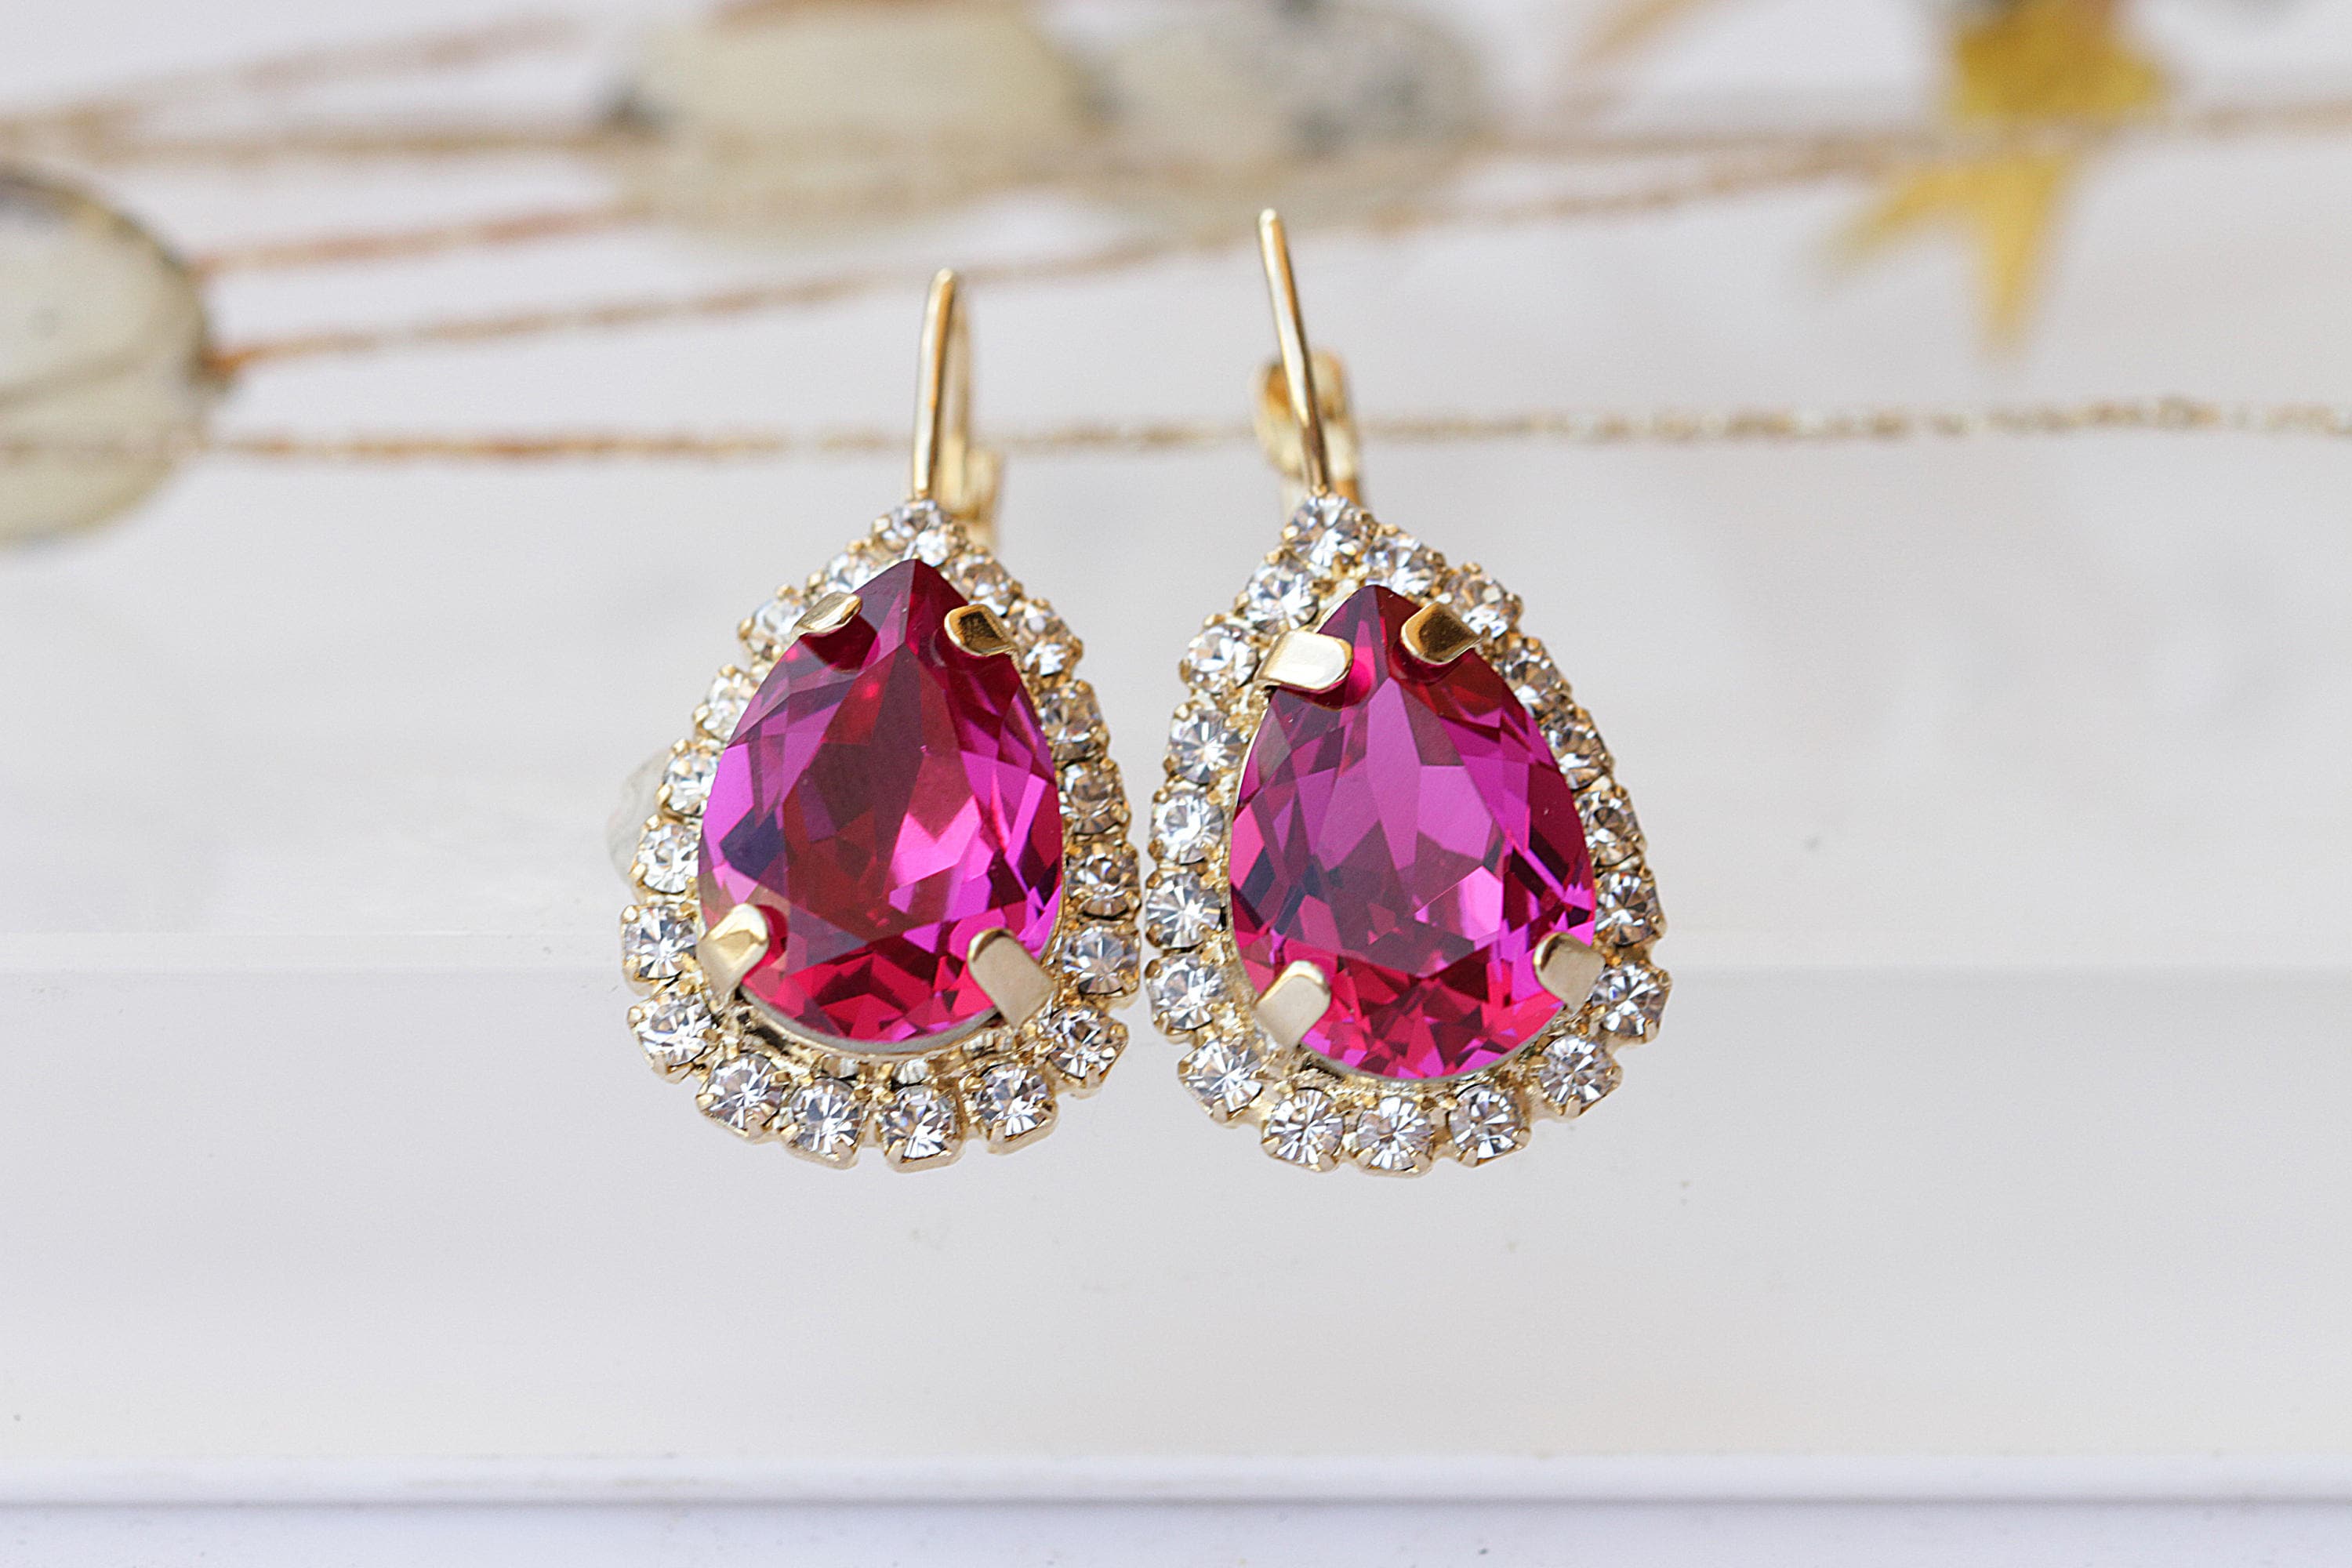 Share 75+ dark pink earrings latest